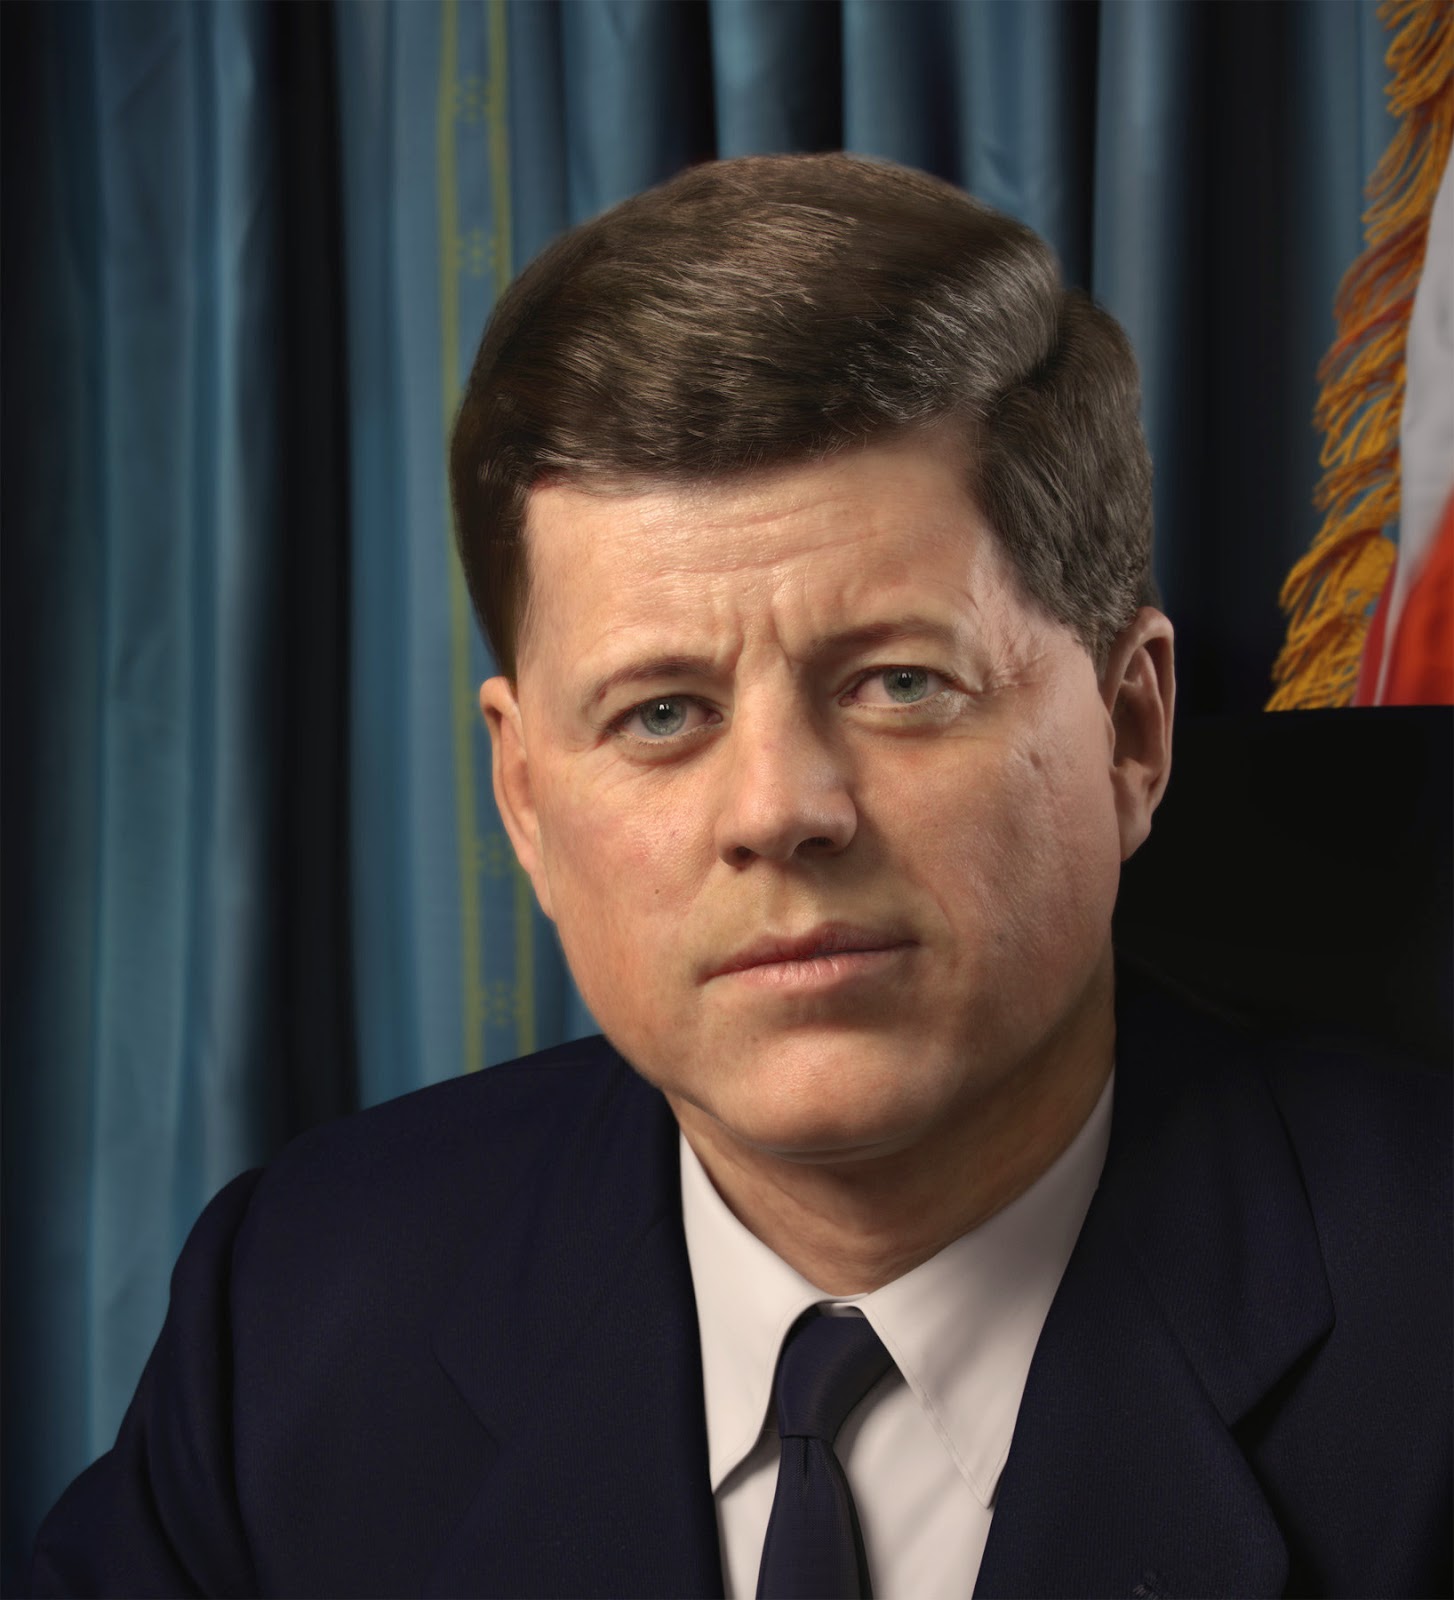 Portrait of JFK | Computer Graphics Daily News